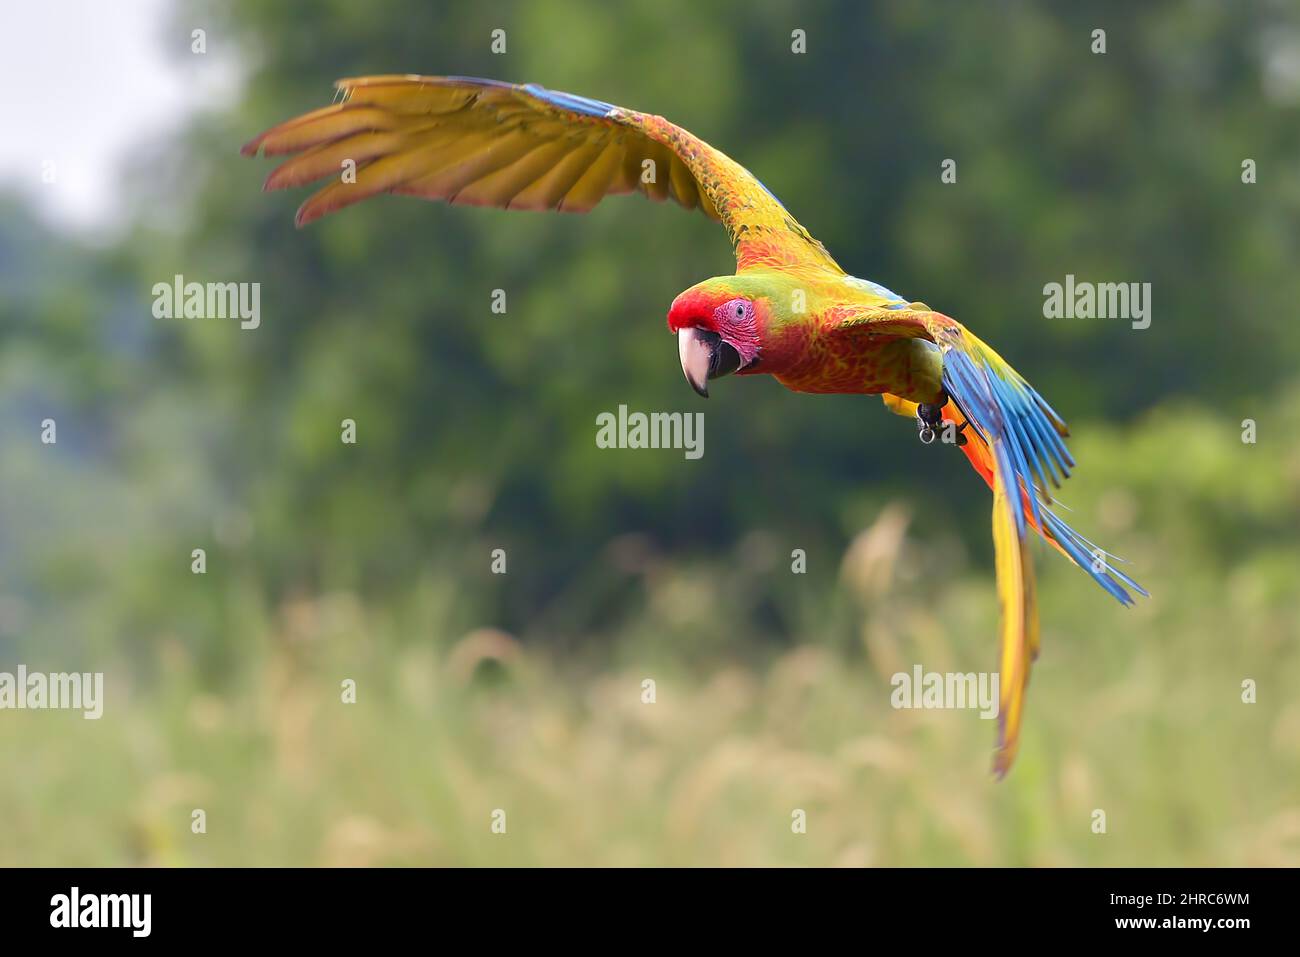 Yellow macaw bird in flight, Indonesia Stock Photo